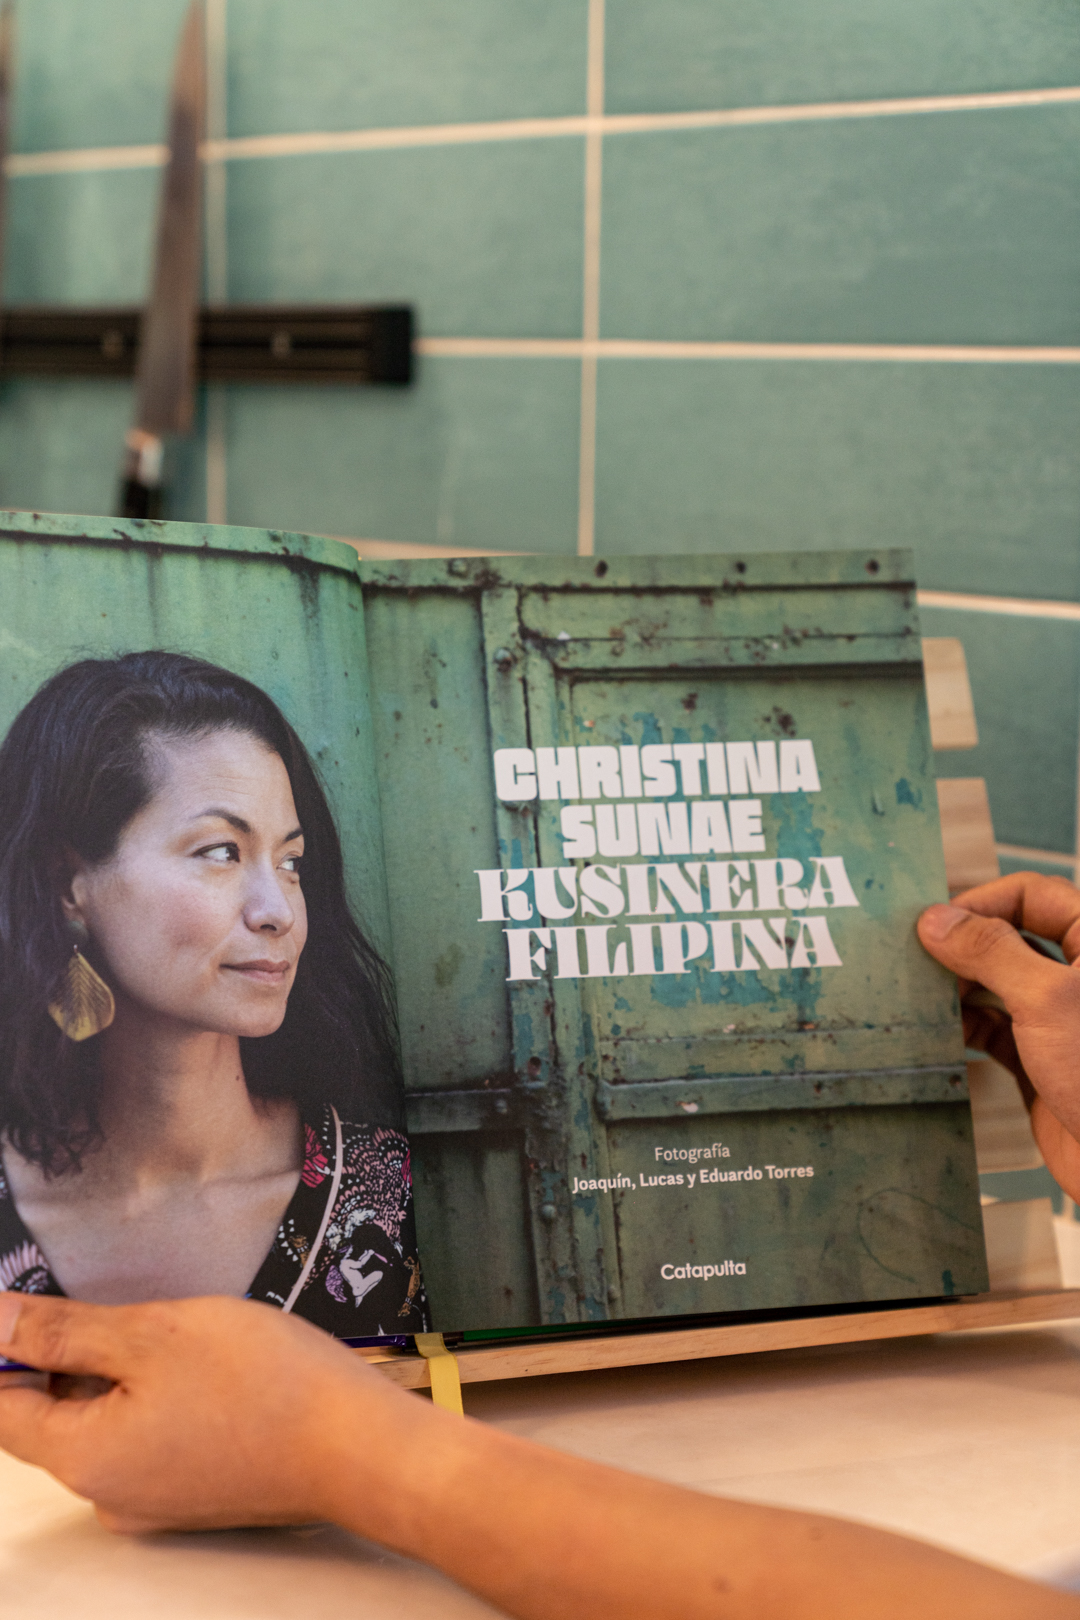 "Kusinera Filipina" is the first Spanish-language book about Filipino cuisine that wasn't originally translated